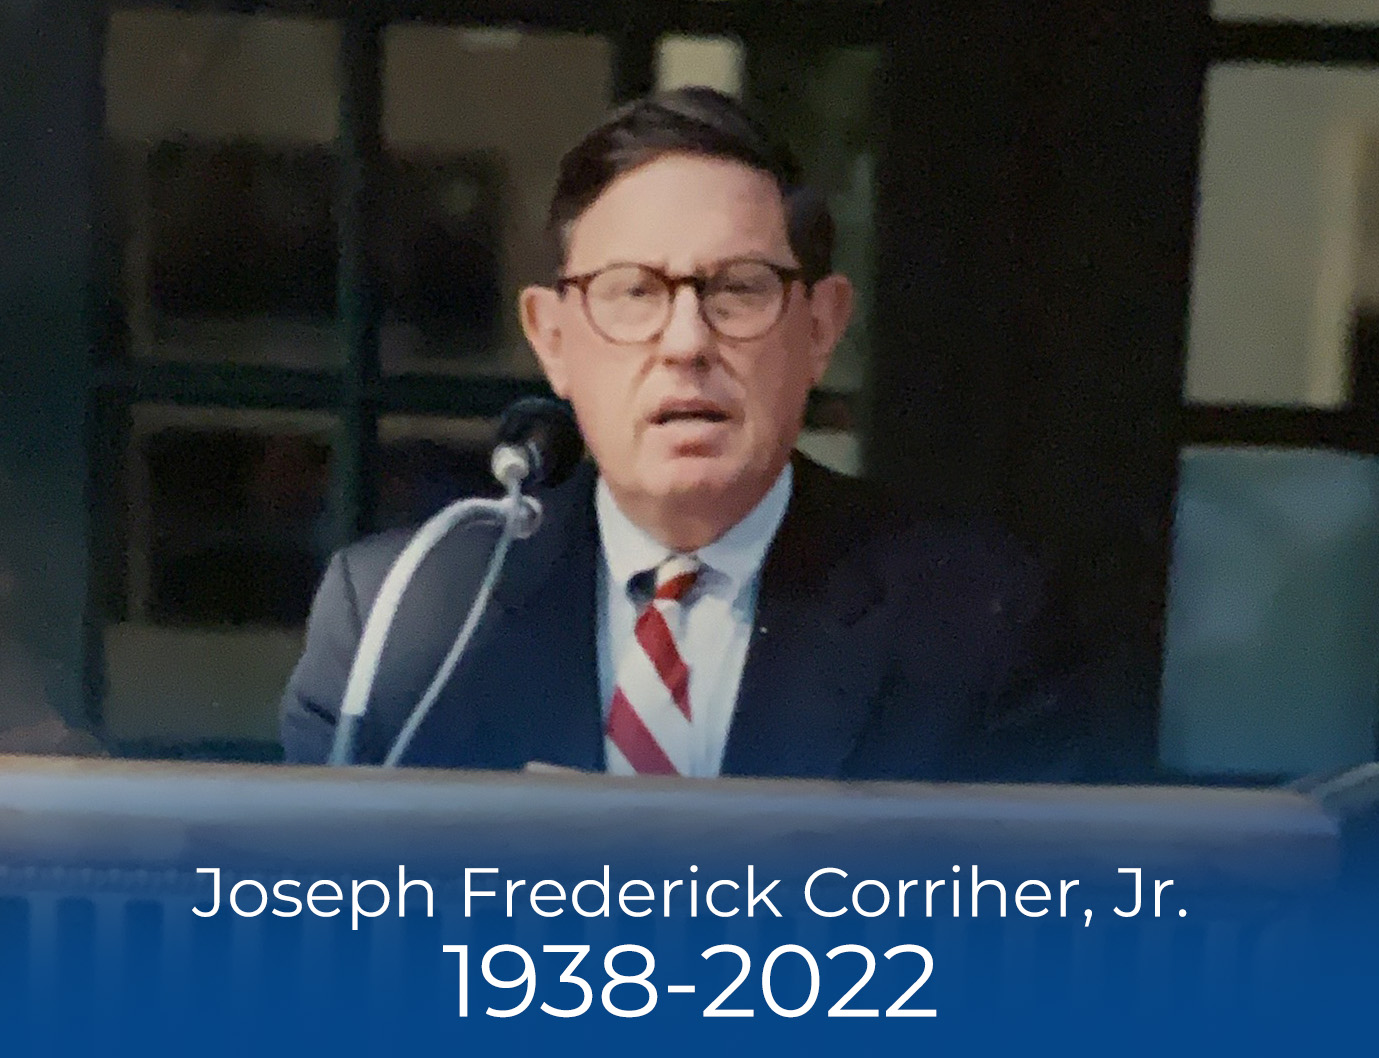 Fred Corriher, Jr. while president of Catawba College